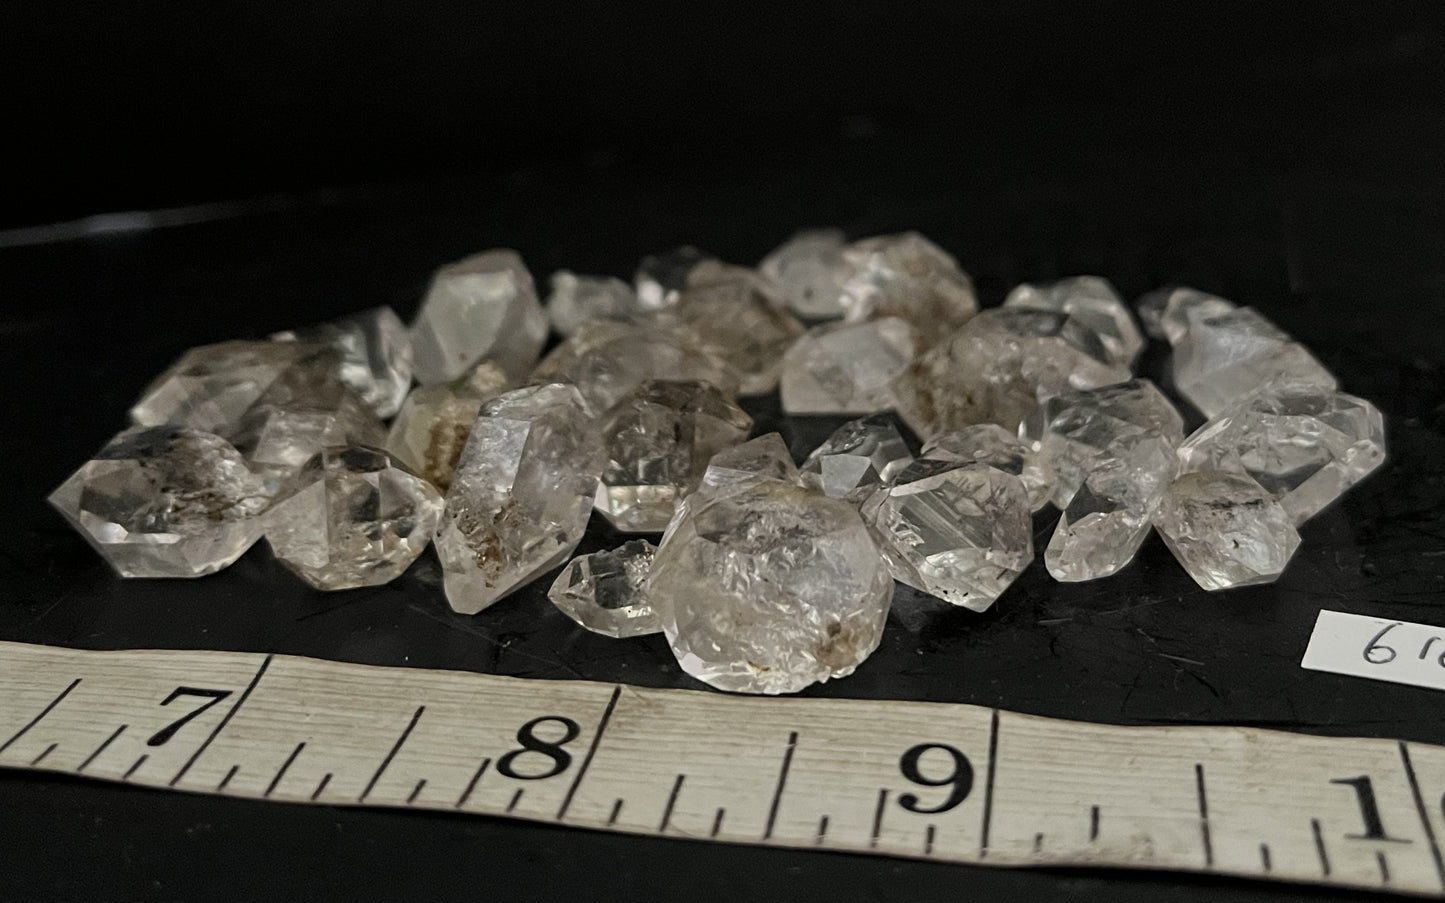 Herkimer Diamond Lot 610-41